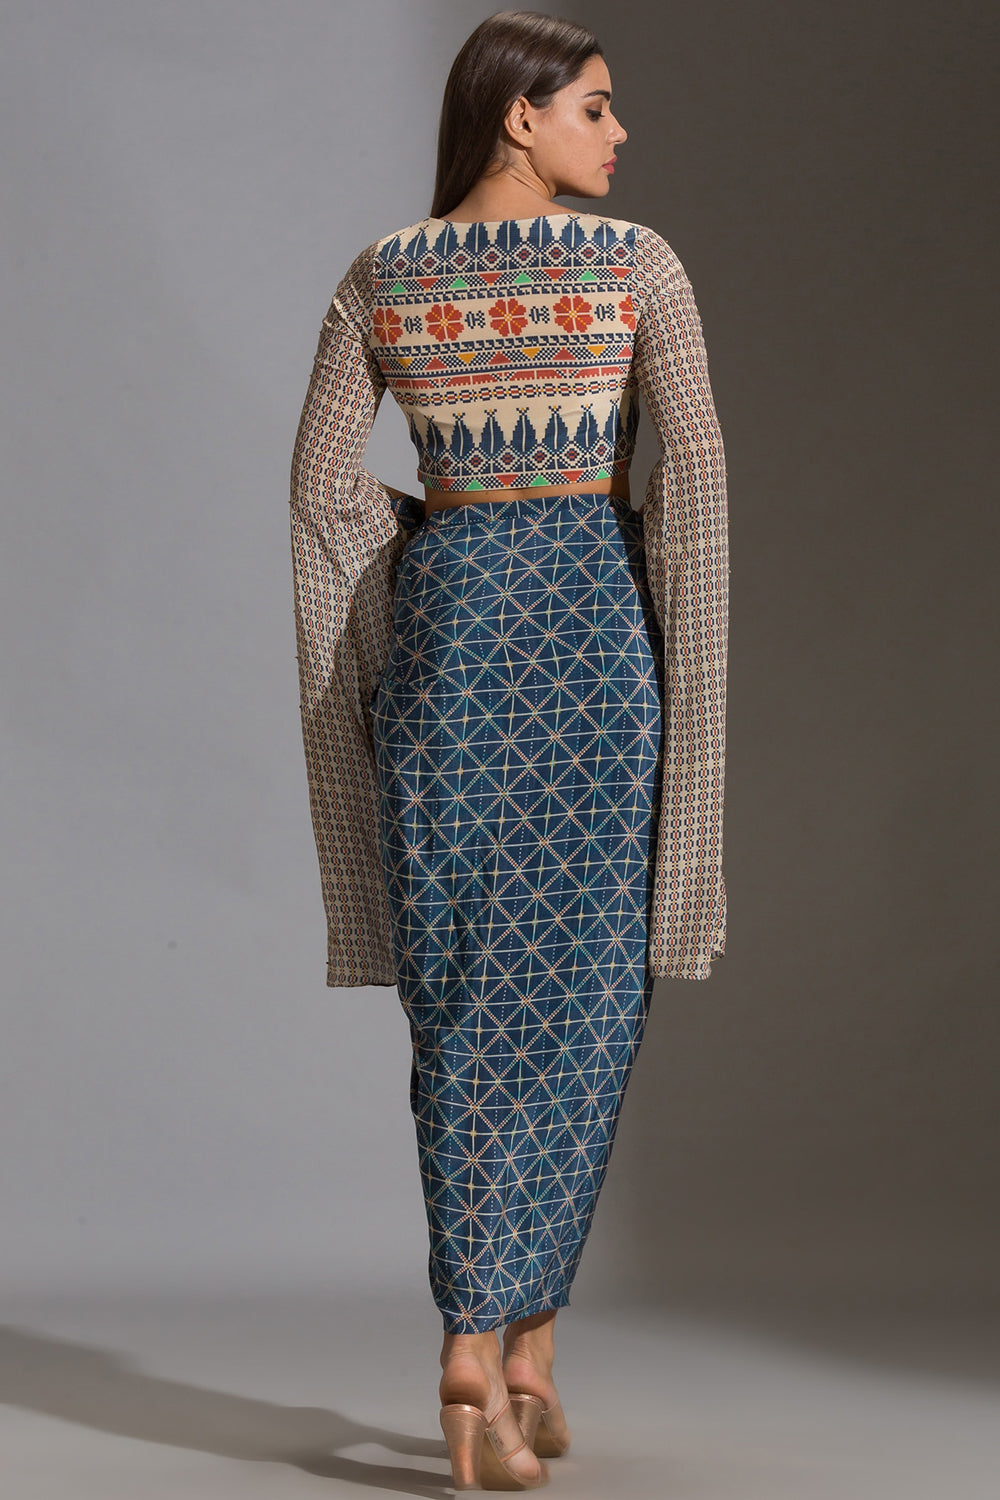 Tiraz Geomtrical Print Angel Sleeves Crop Top And Skirt